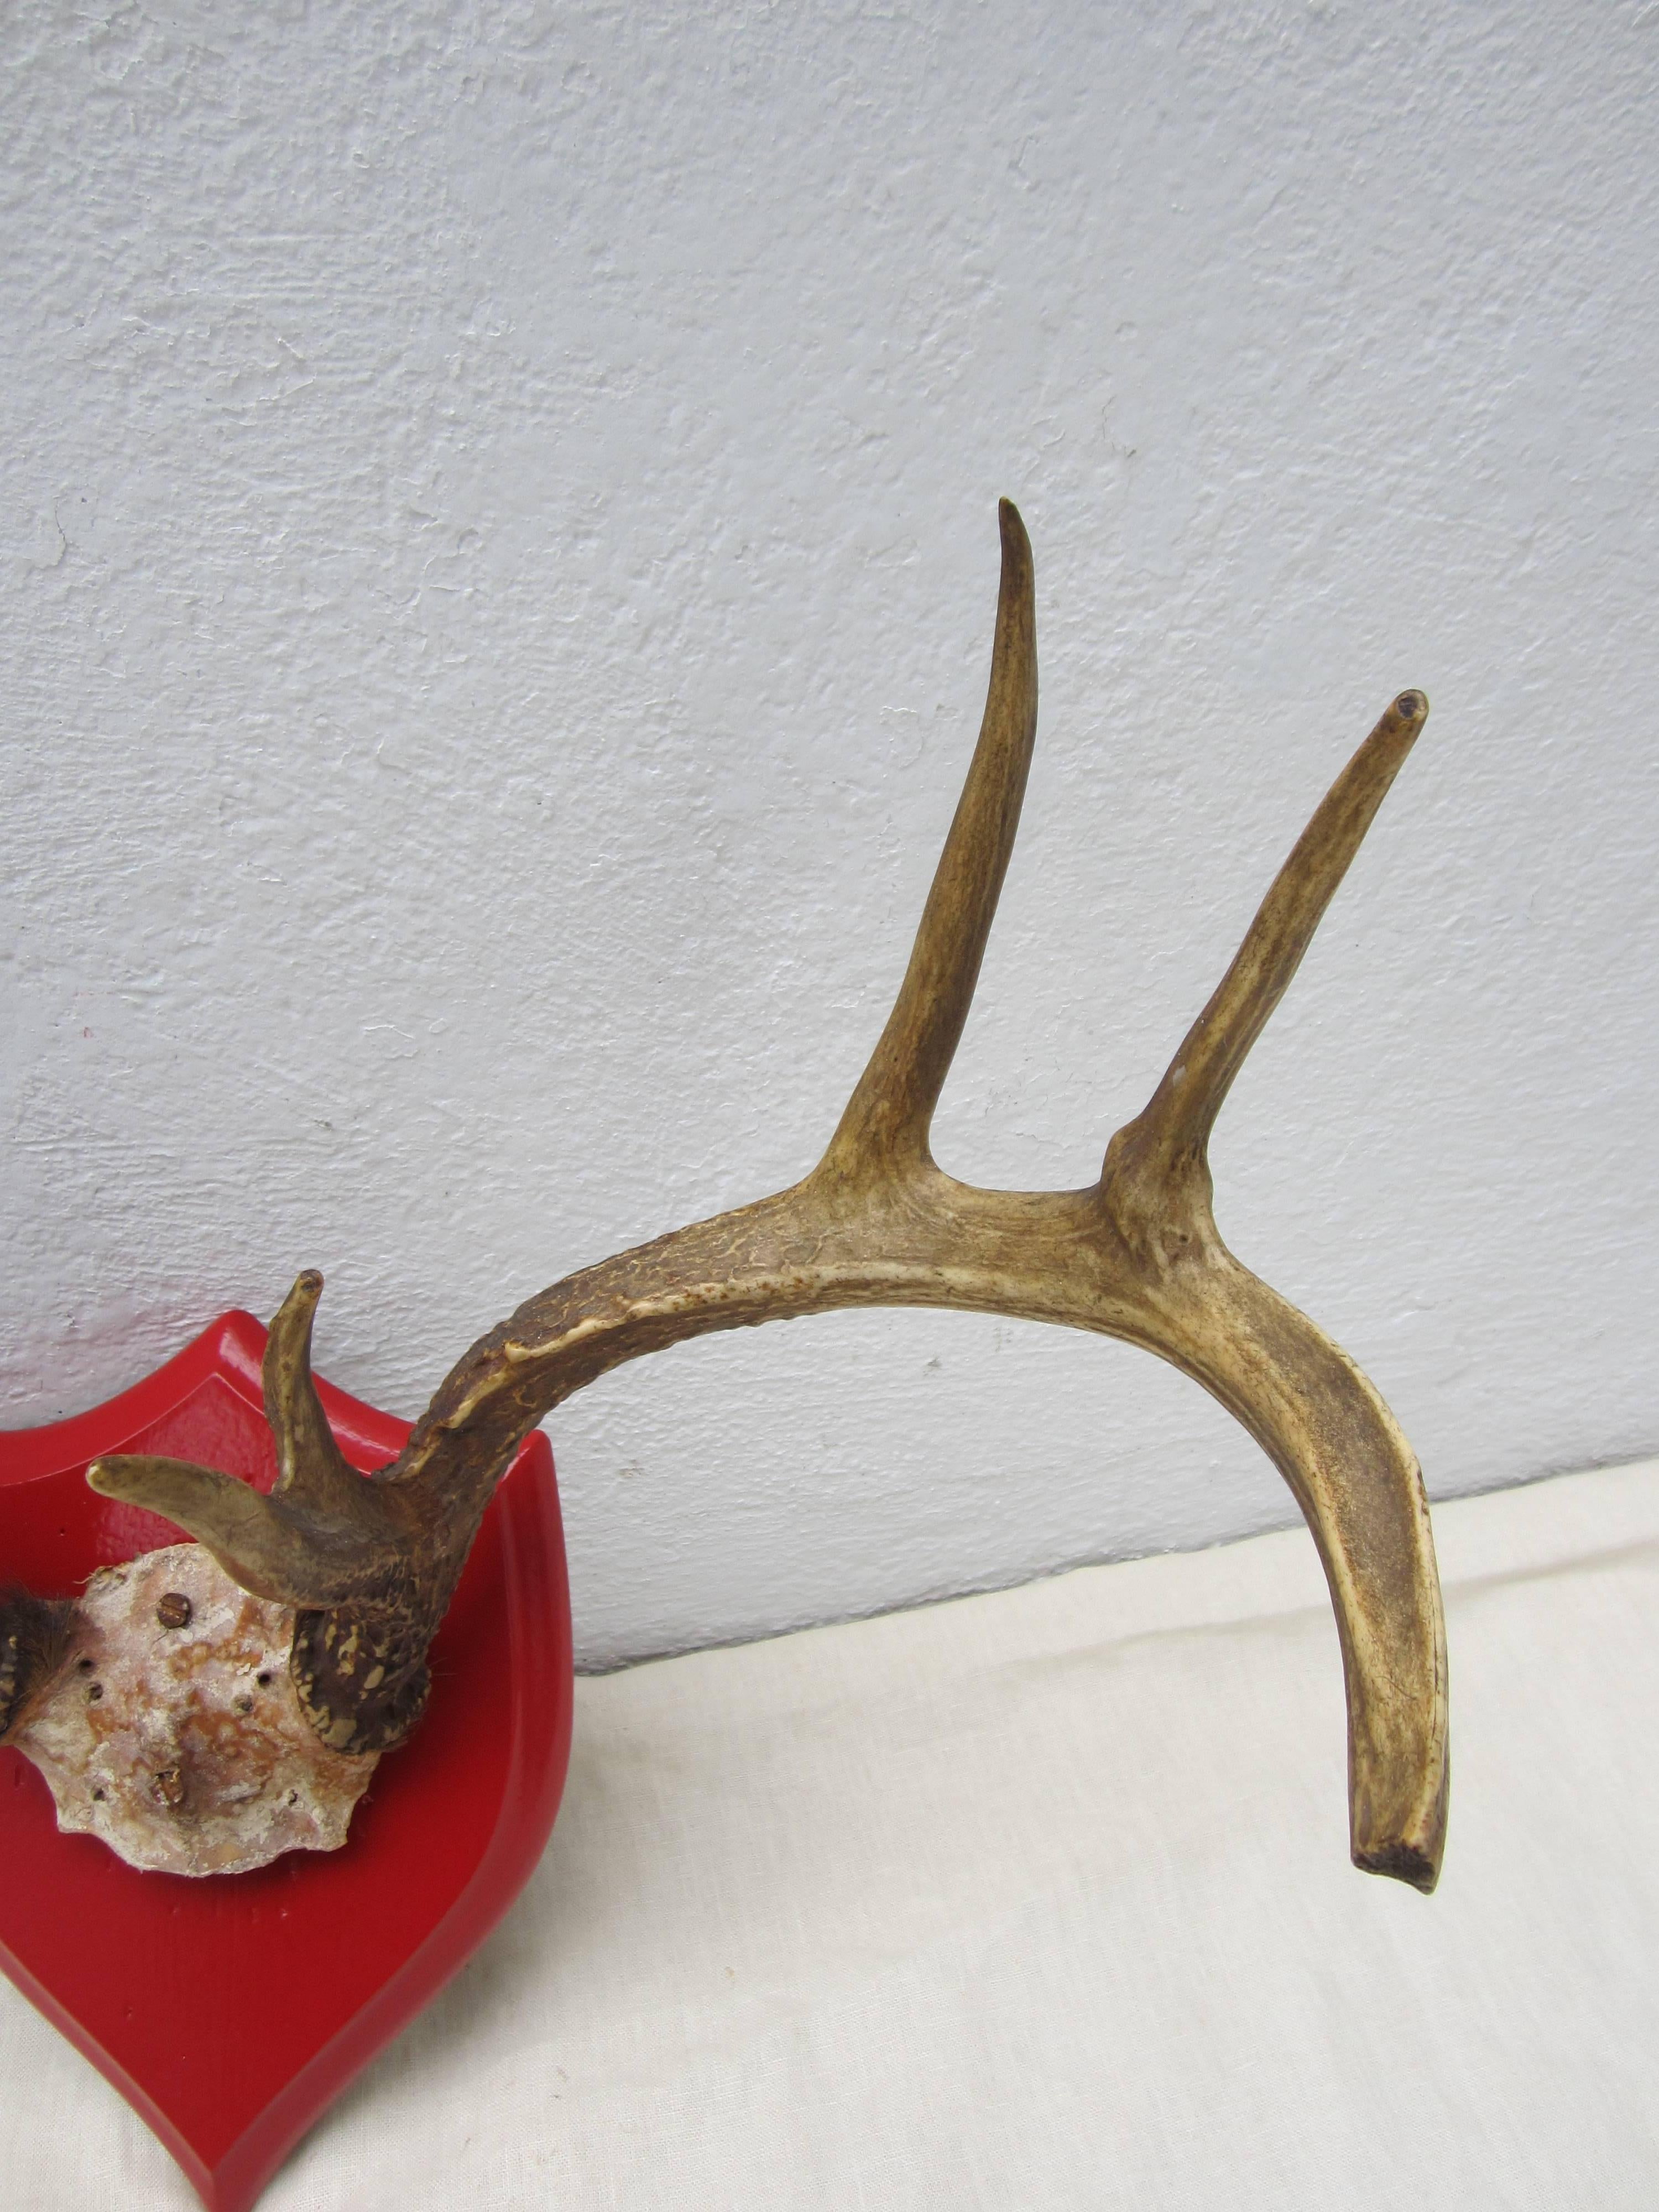 Set of deer antlers mounted on wood plaque.